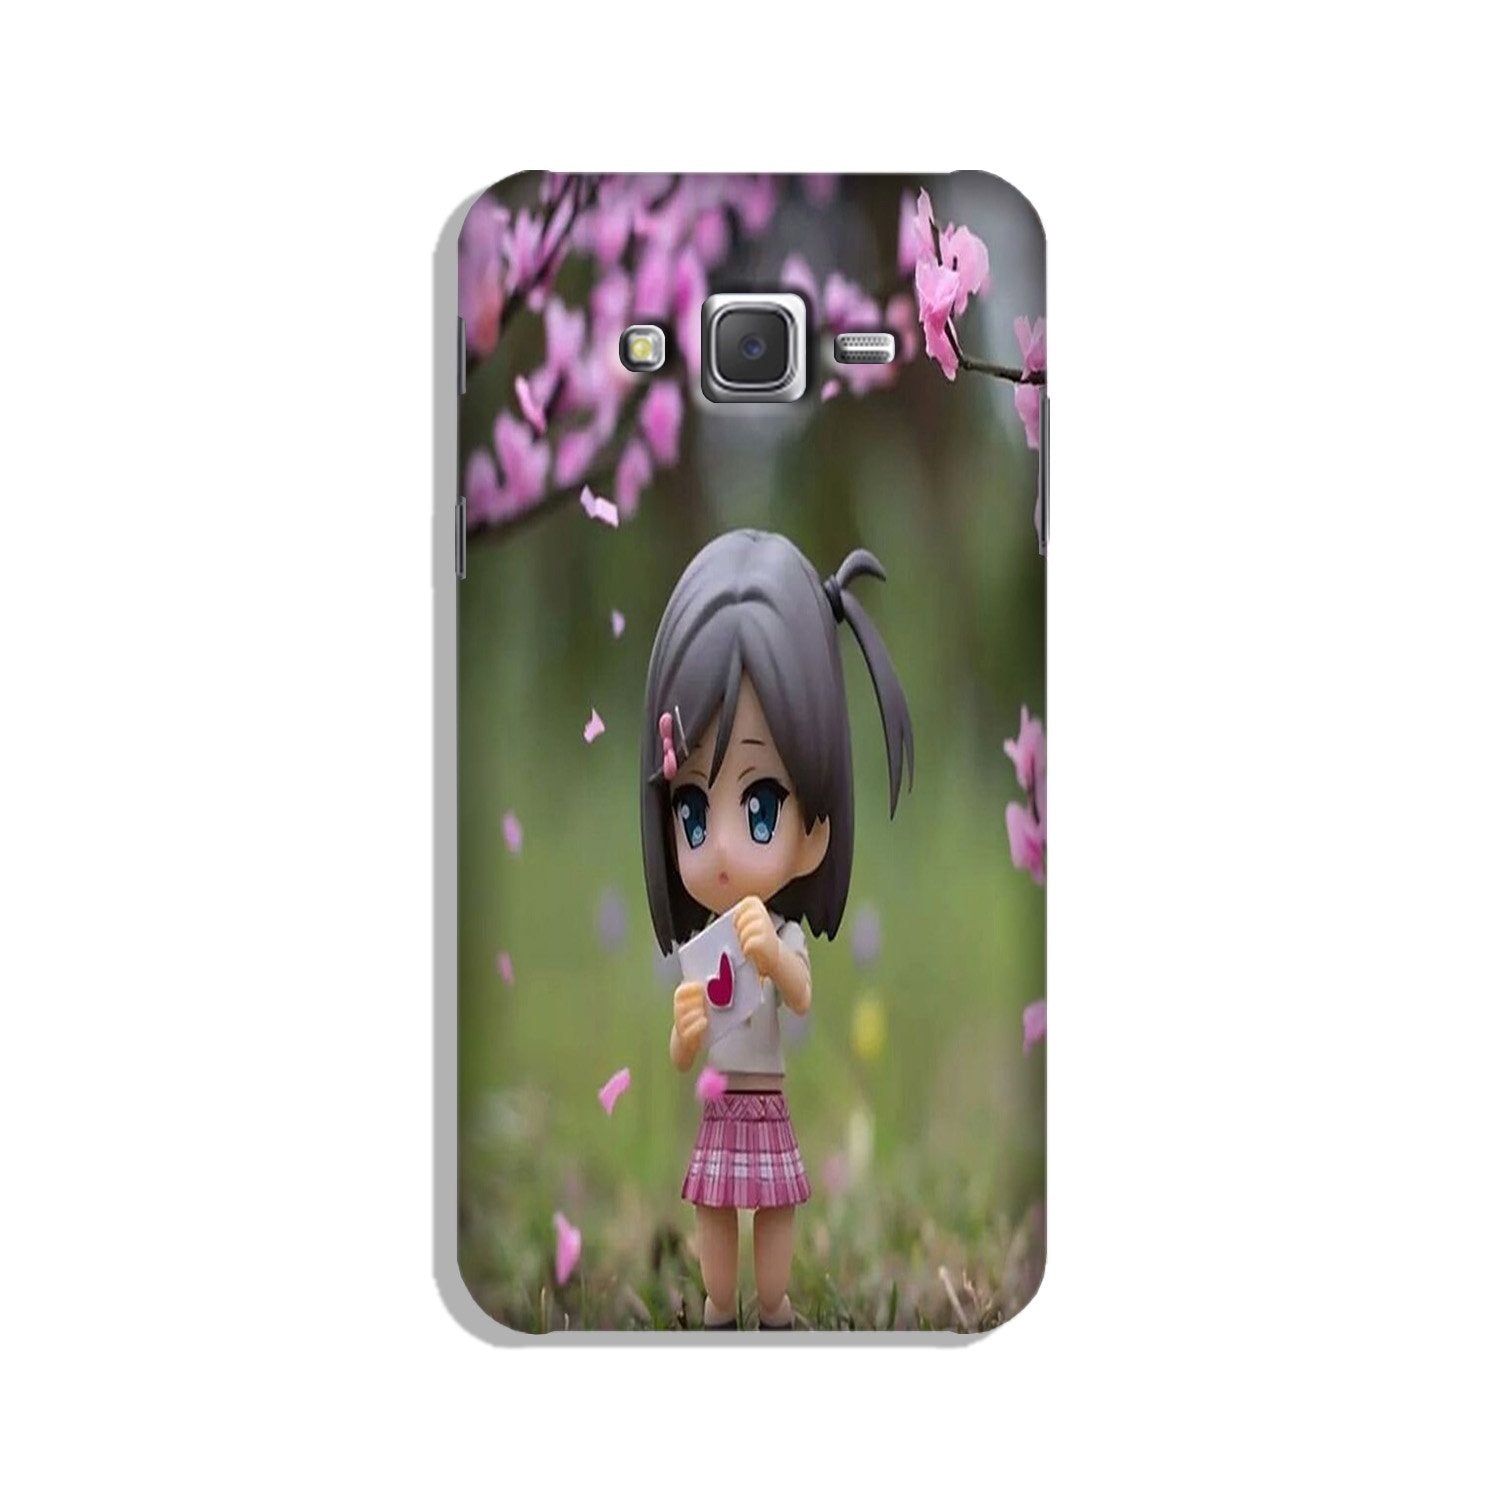 Cute Girl Case for Galaxy J3 (2015)